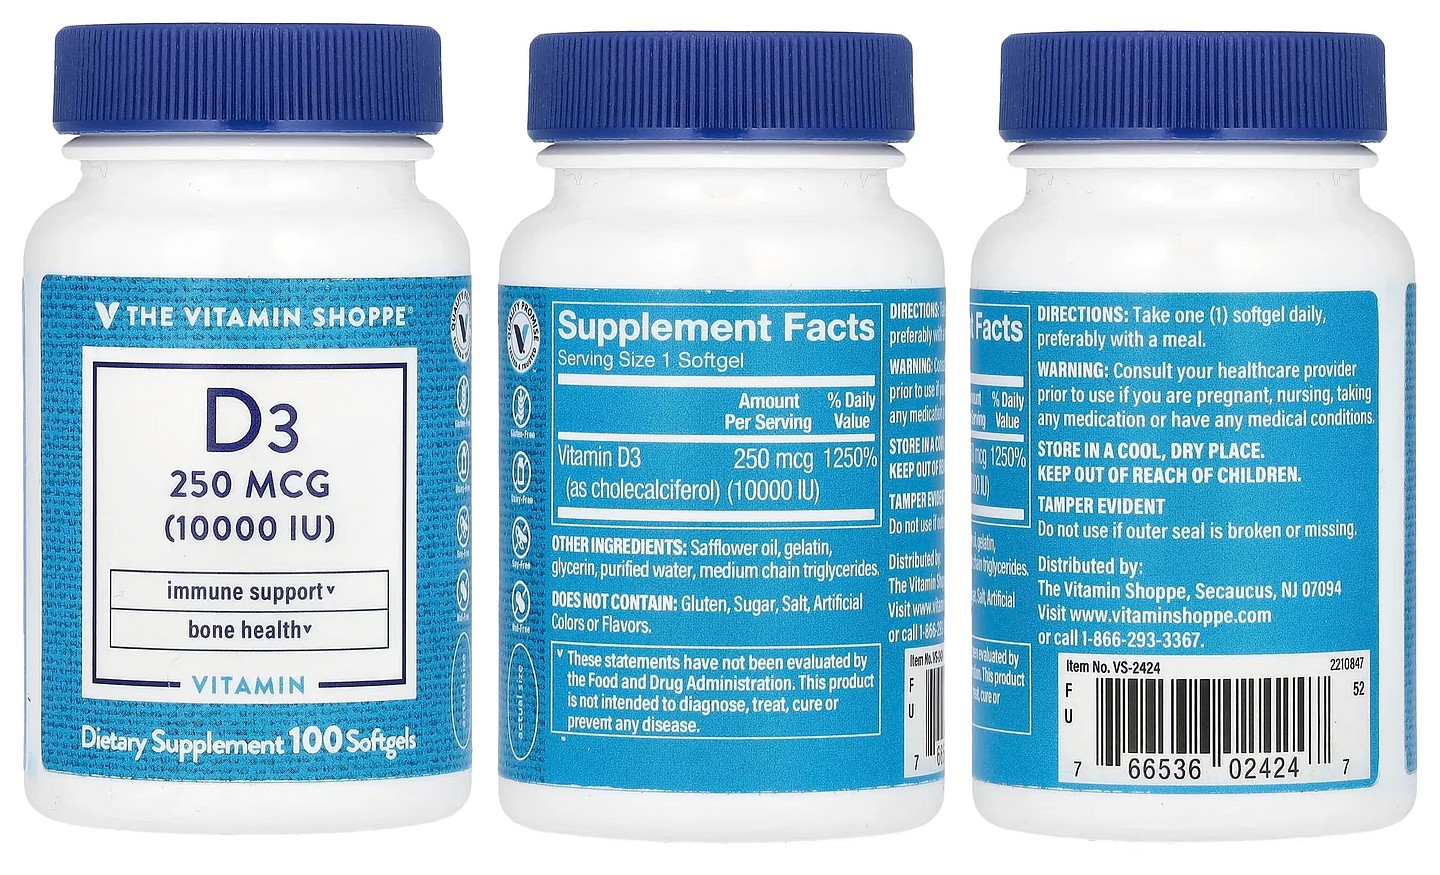 The Vitamin Shoppe, Vitamin D3 packaging